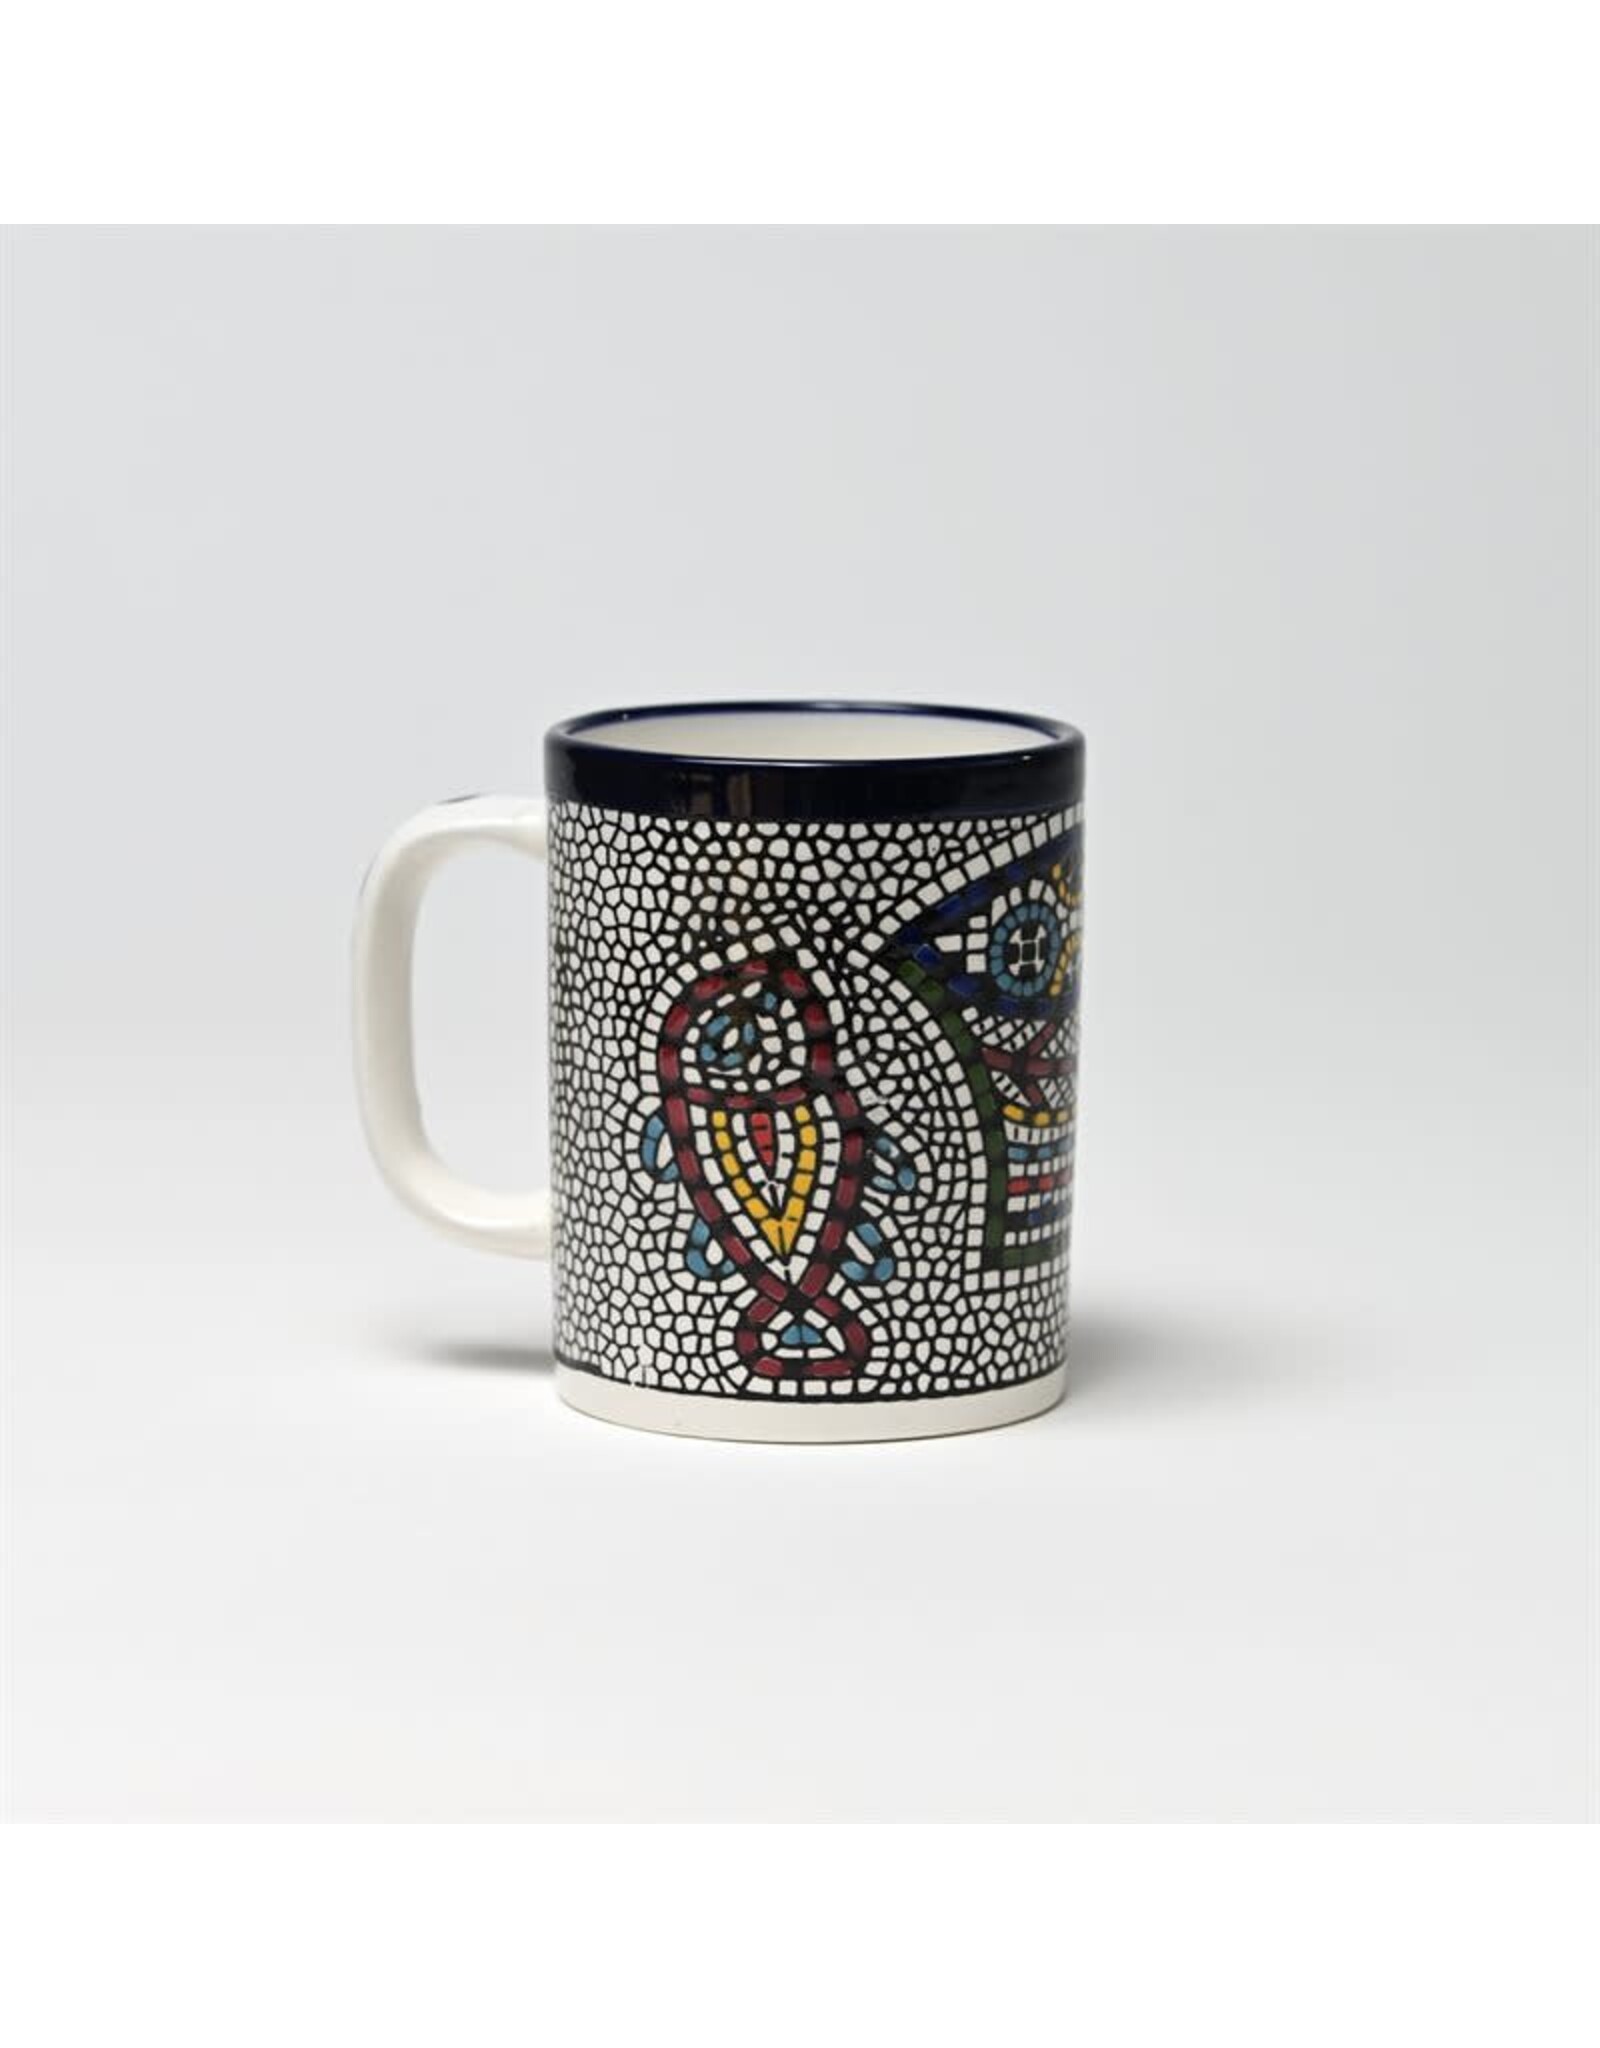 Shomali Ceramic Mug from the Holy Land - Loaves and Fishes